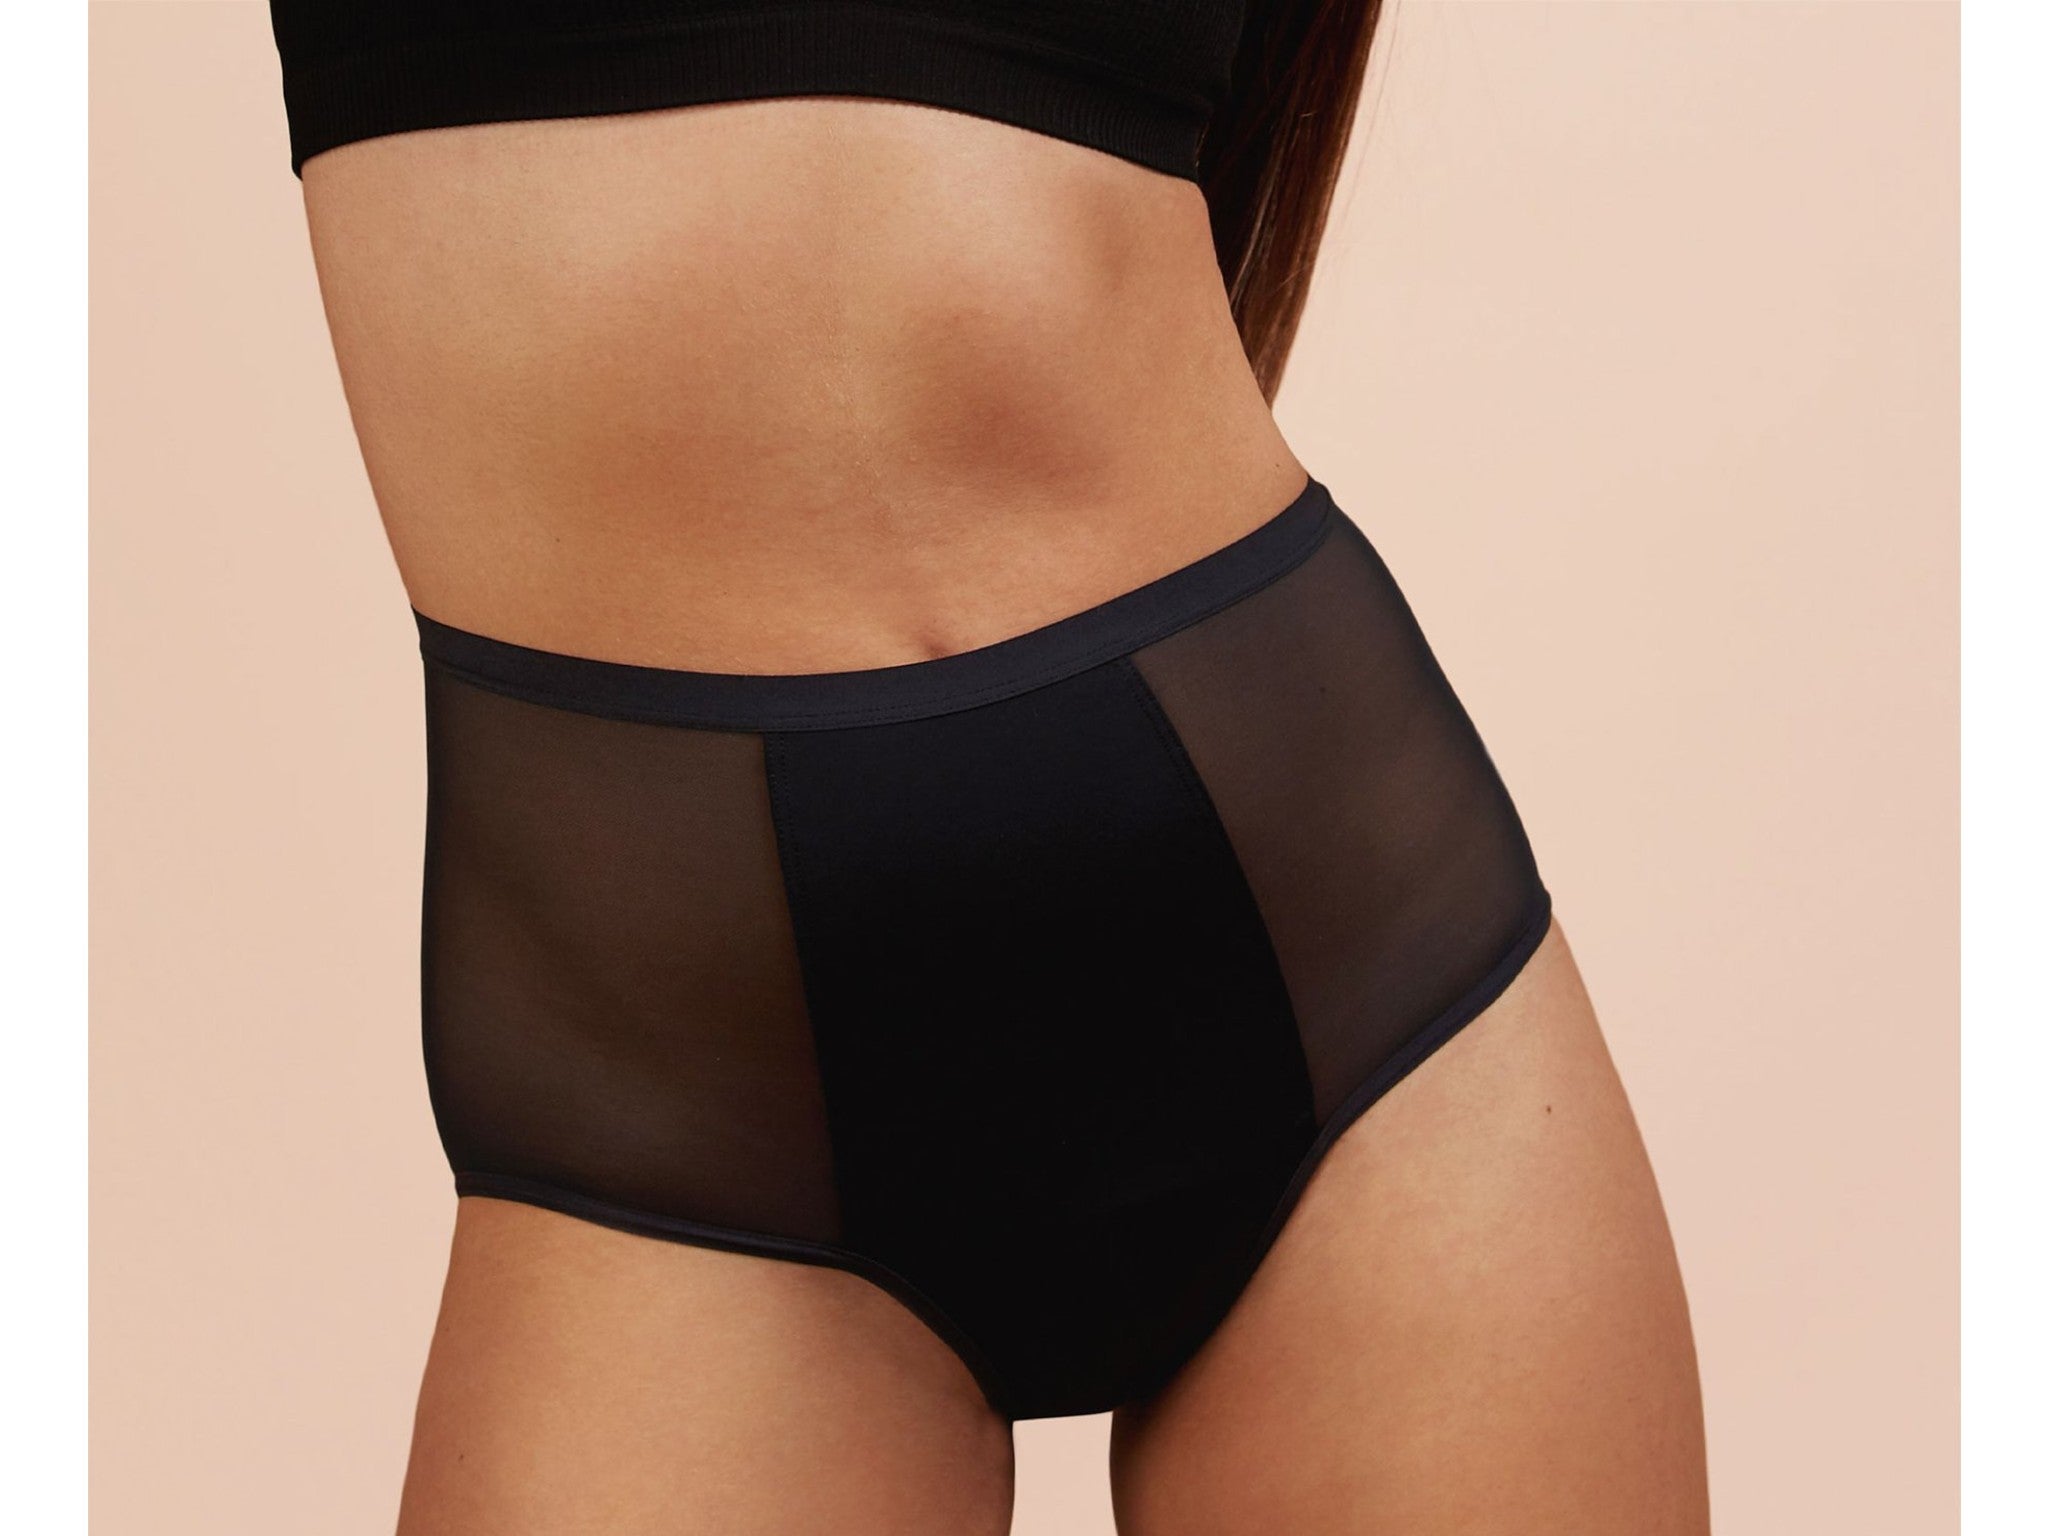 CityComfort Period Pants for Teenage Girls, Girls Underwear - Pack of